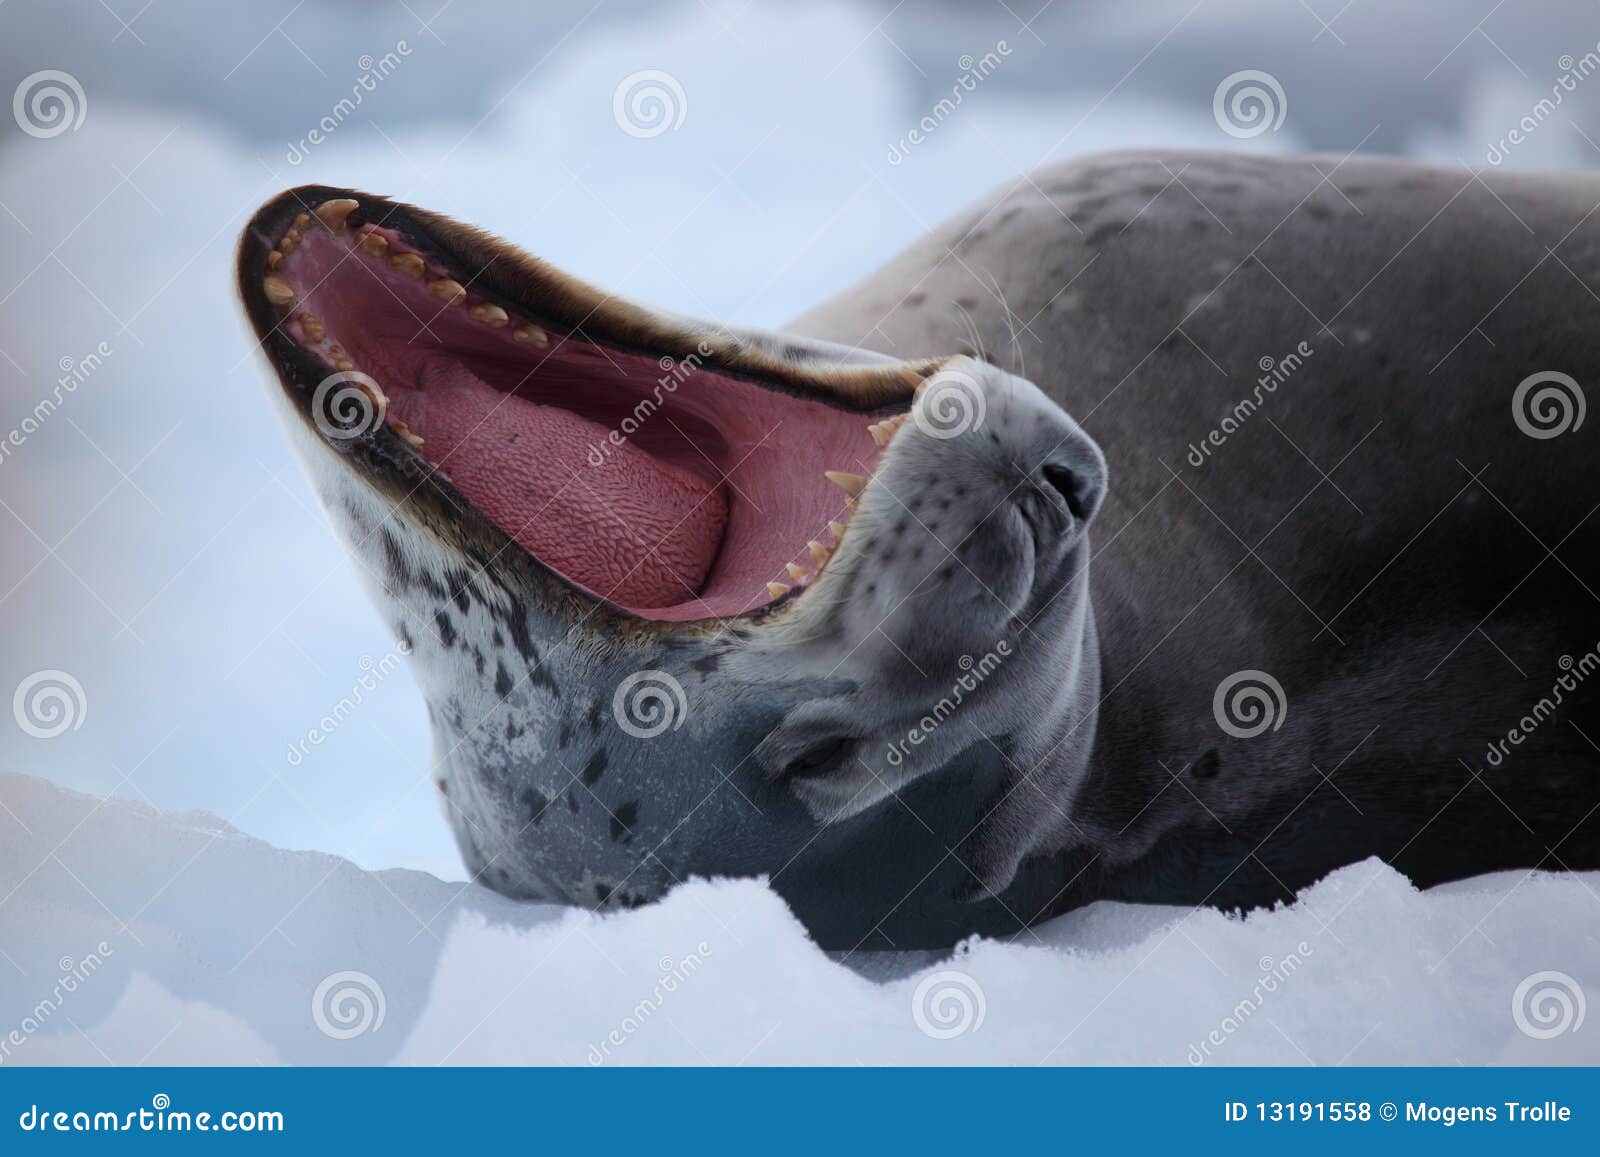 leopard seal yawning, antarctica